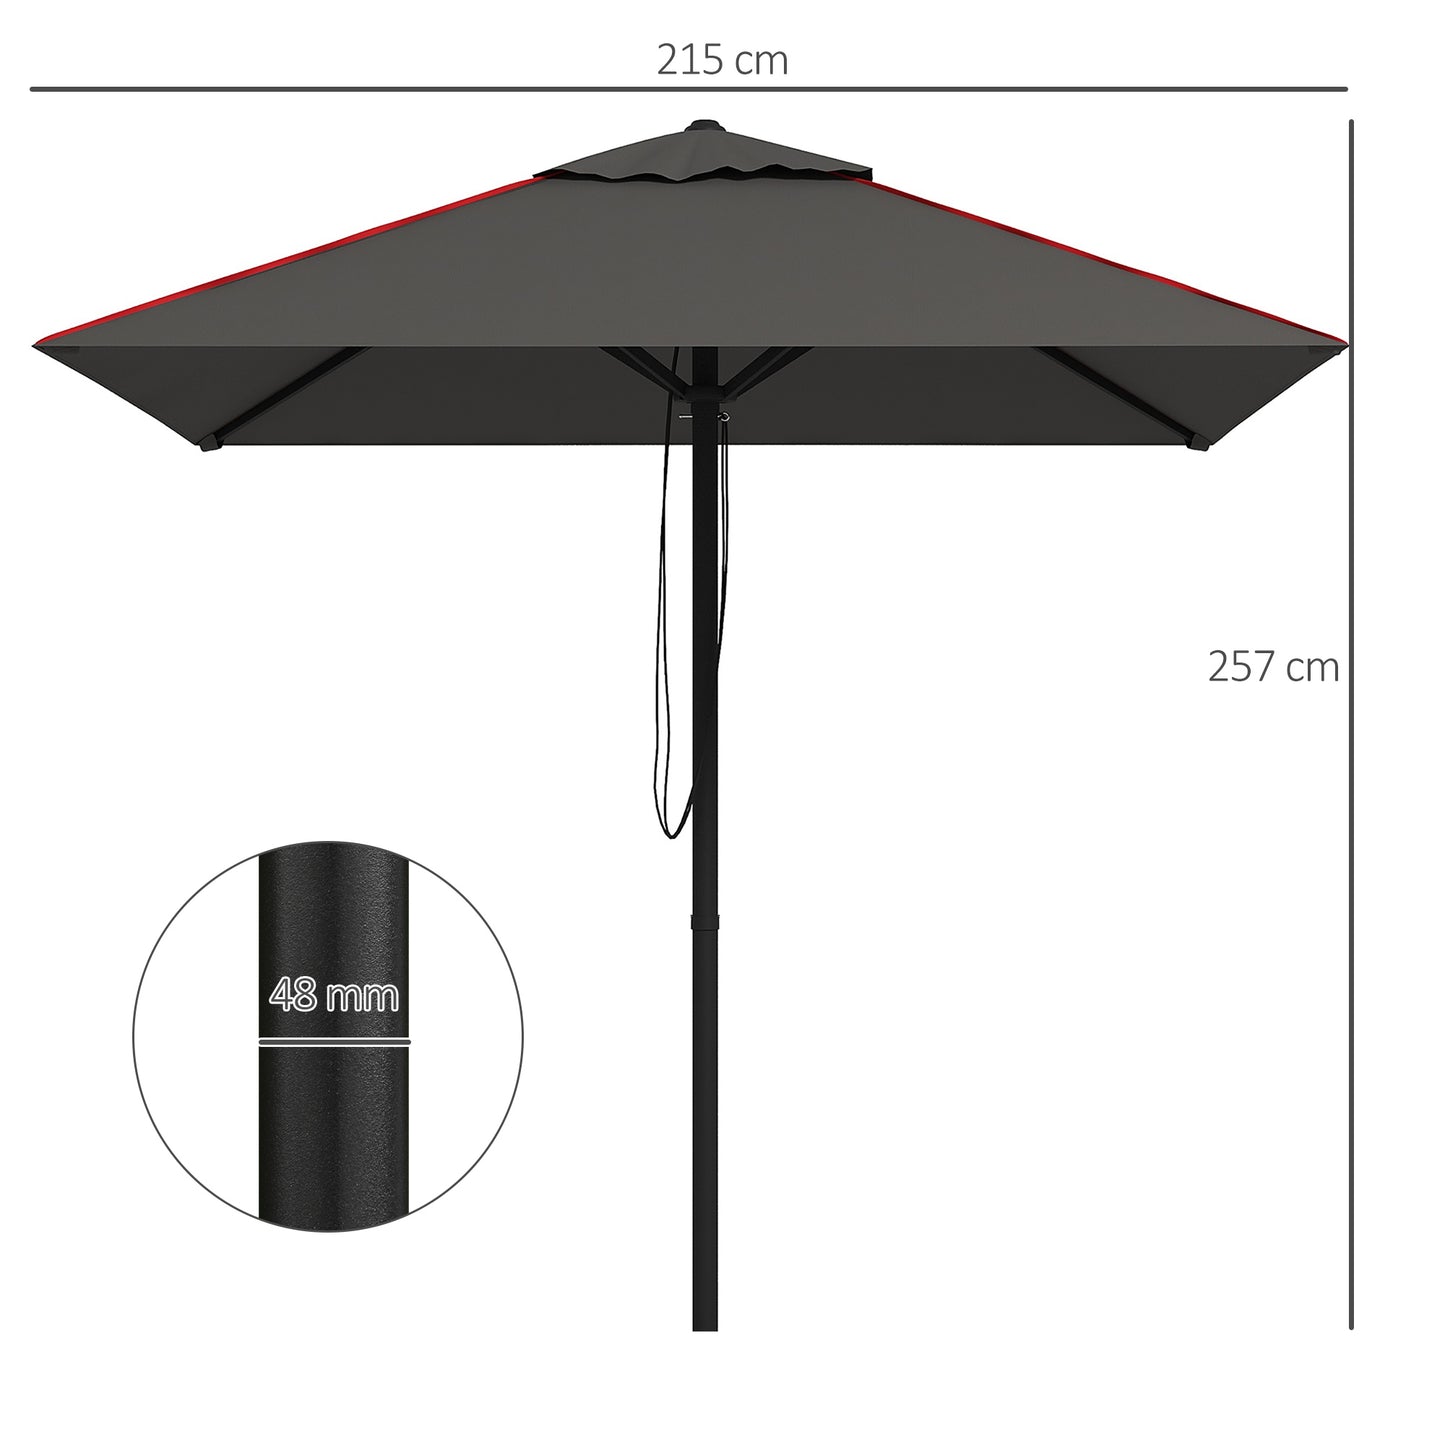 Outsunny Patio Parasol Umbrella with Vent, Garden Market Table Umbrella Sun Shade Canopy with Piping Side, Grey